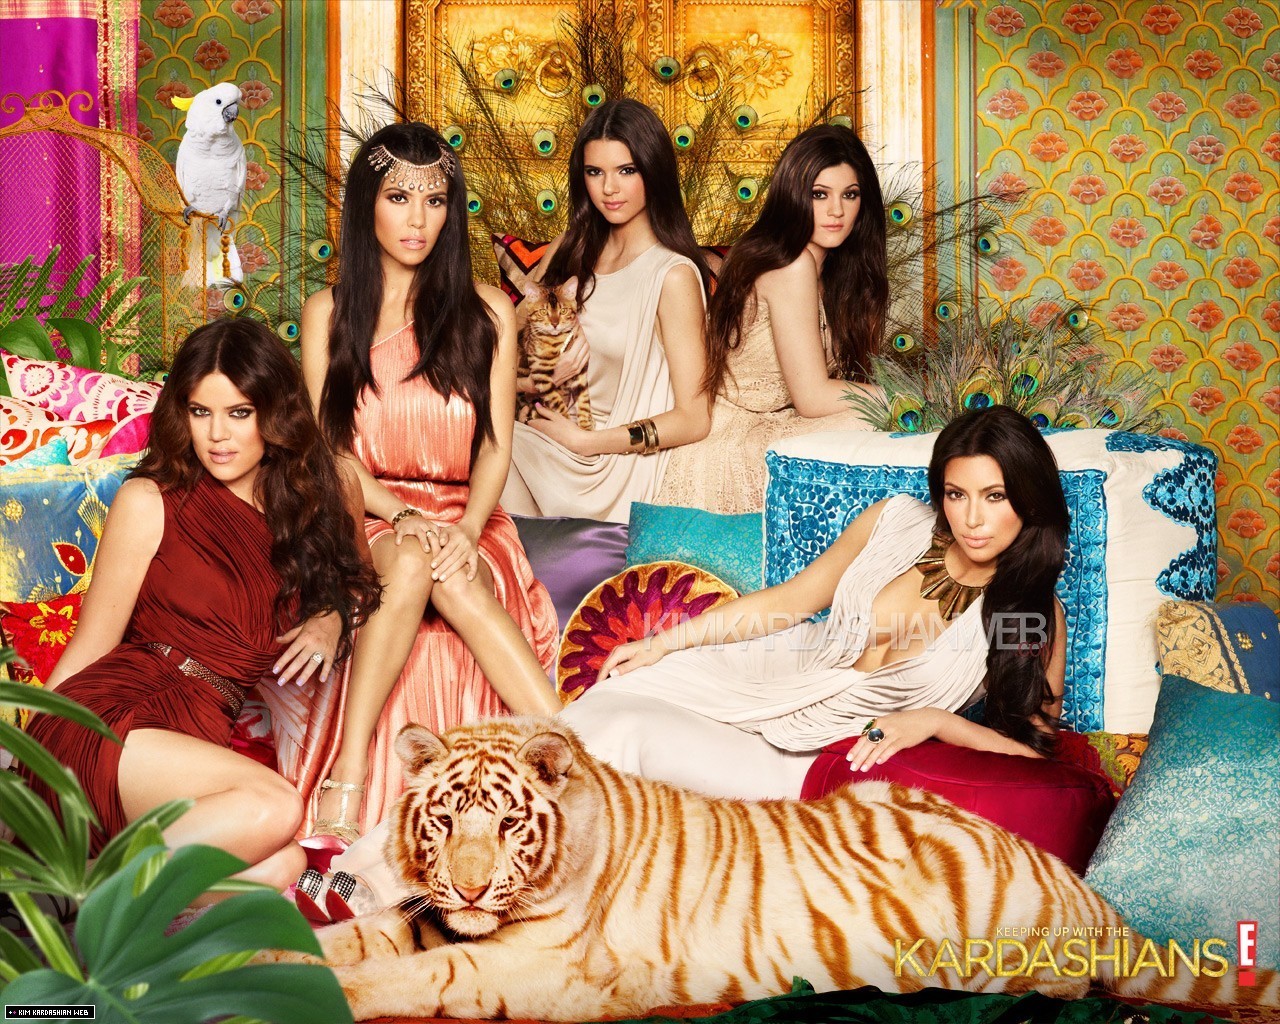 Keeping Up With The Kardashians: Season 6